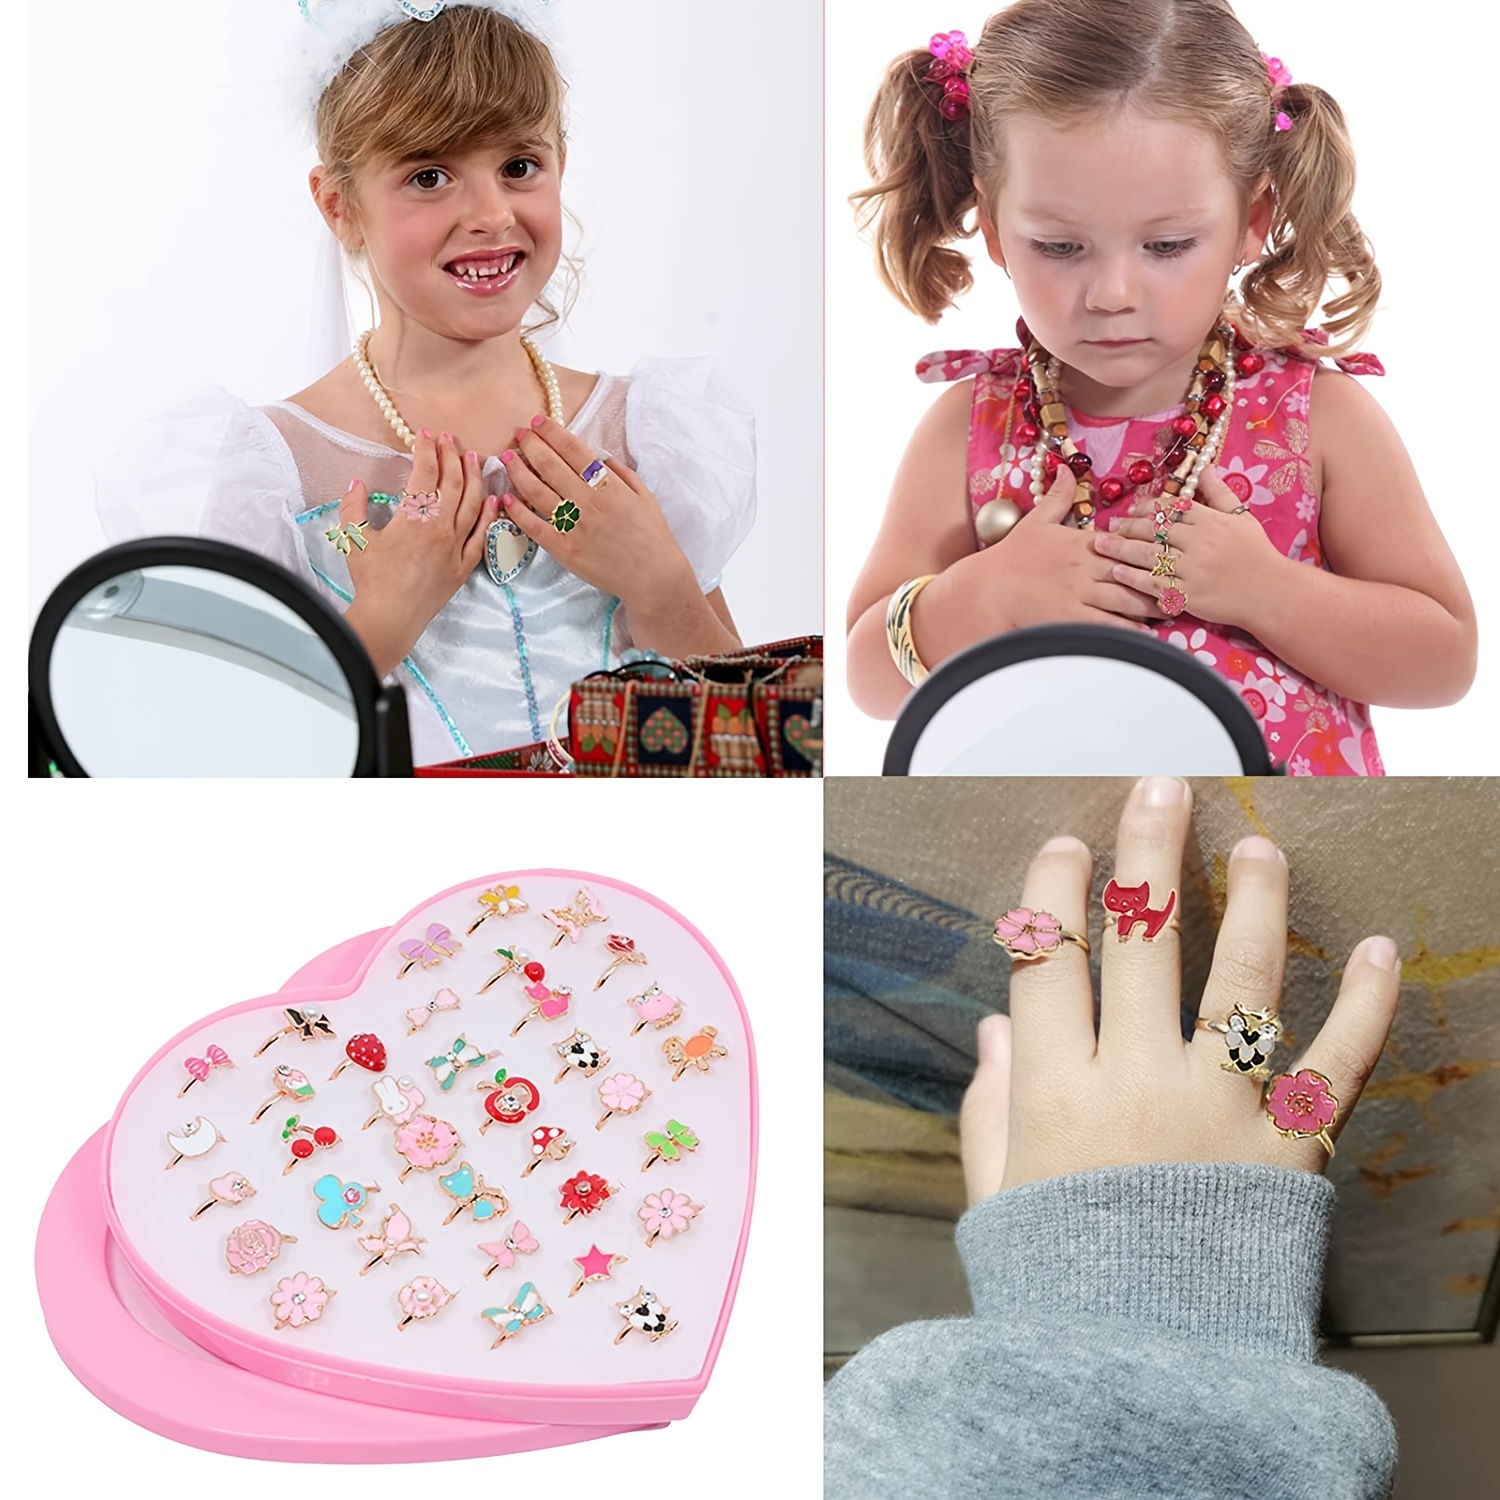 dress up play toys Children Finger Rings Kids Jewelry for Girls